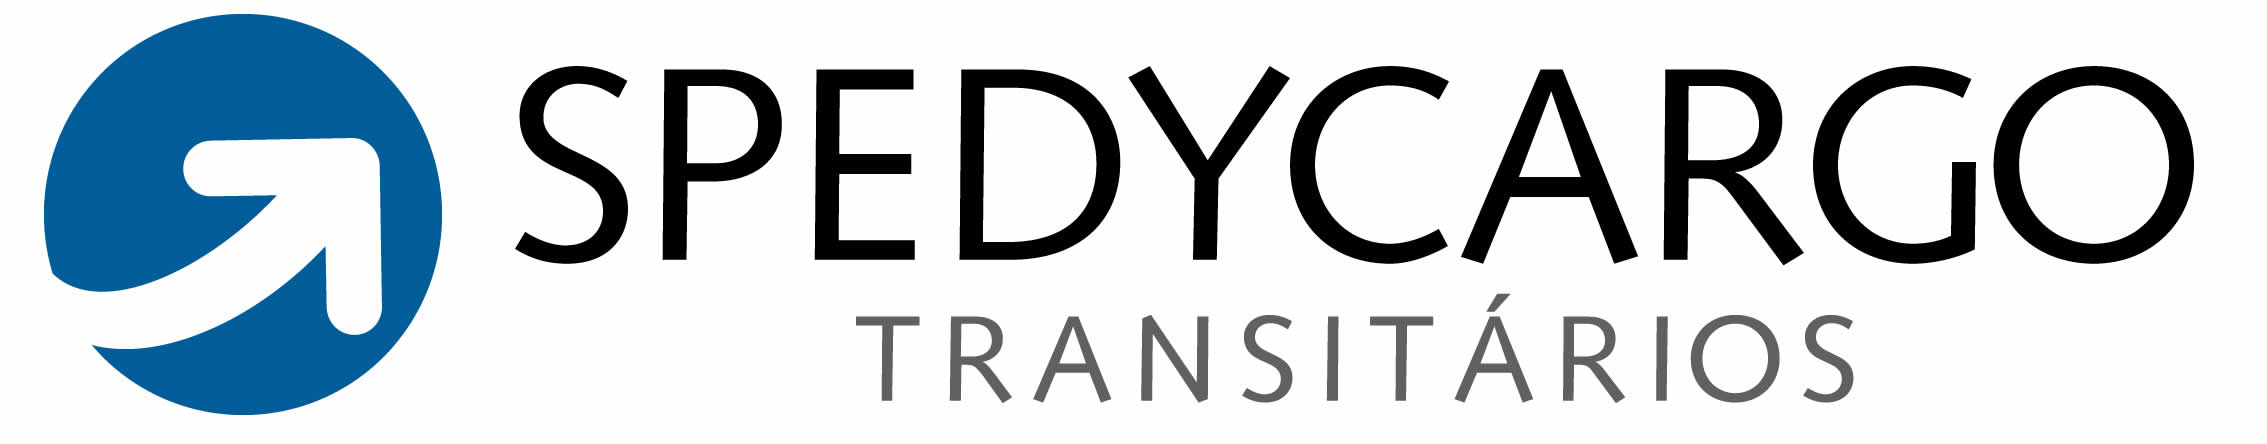 SpedyCargo logo